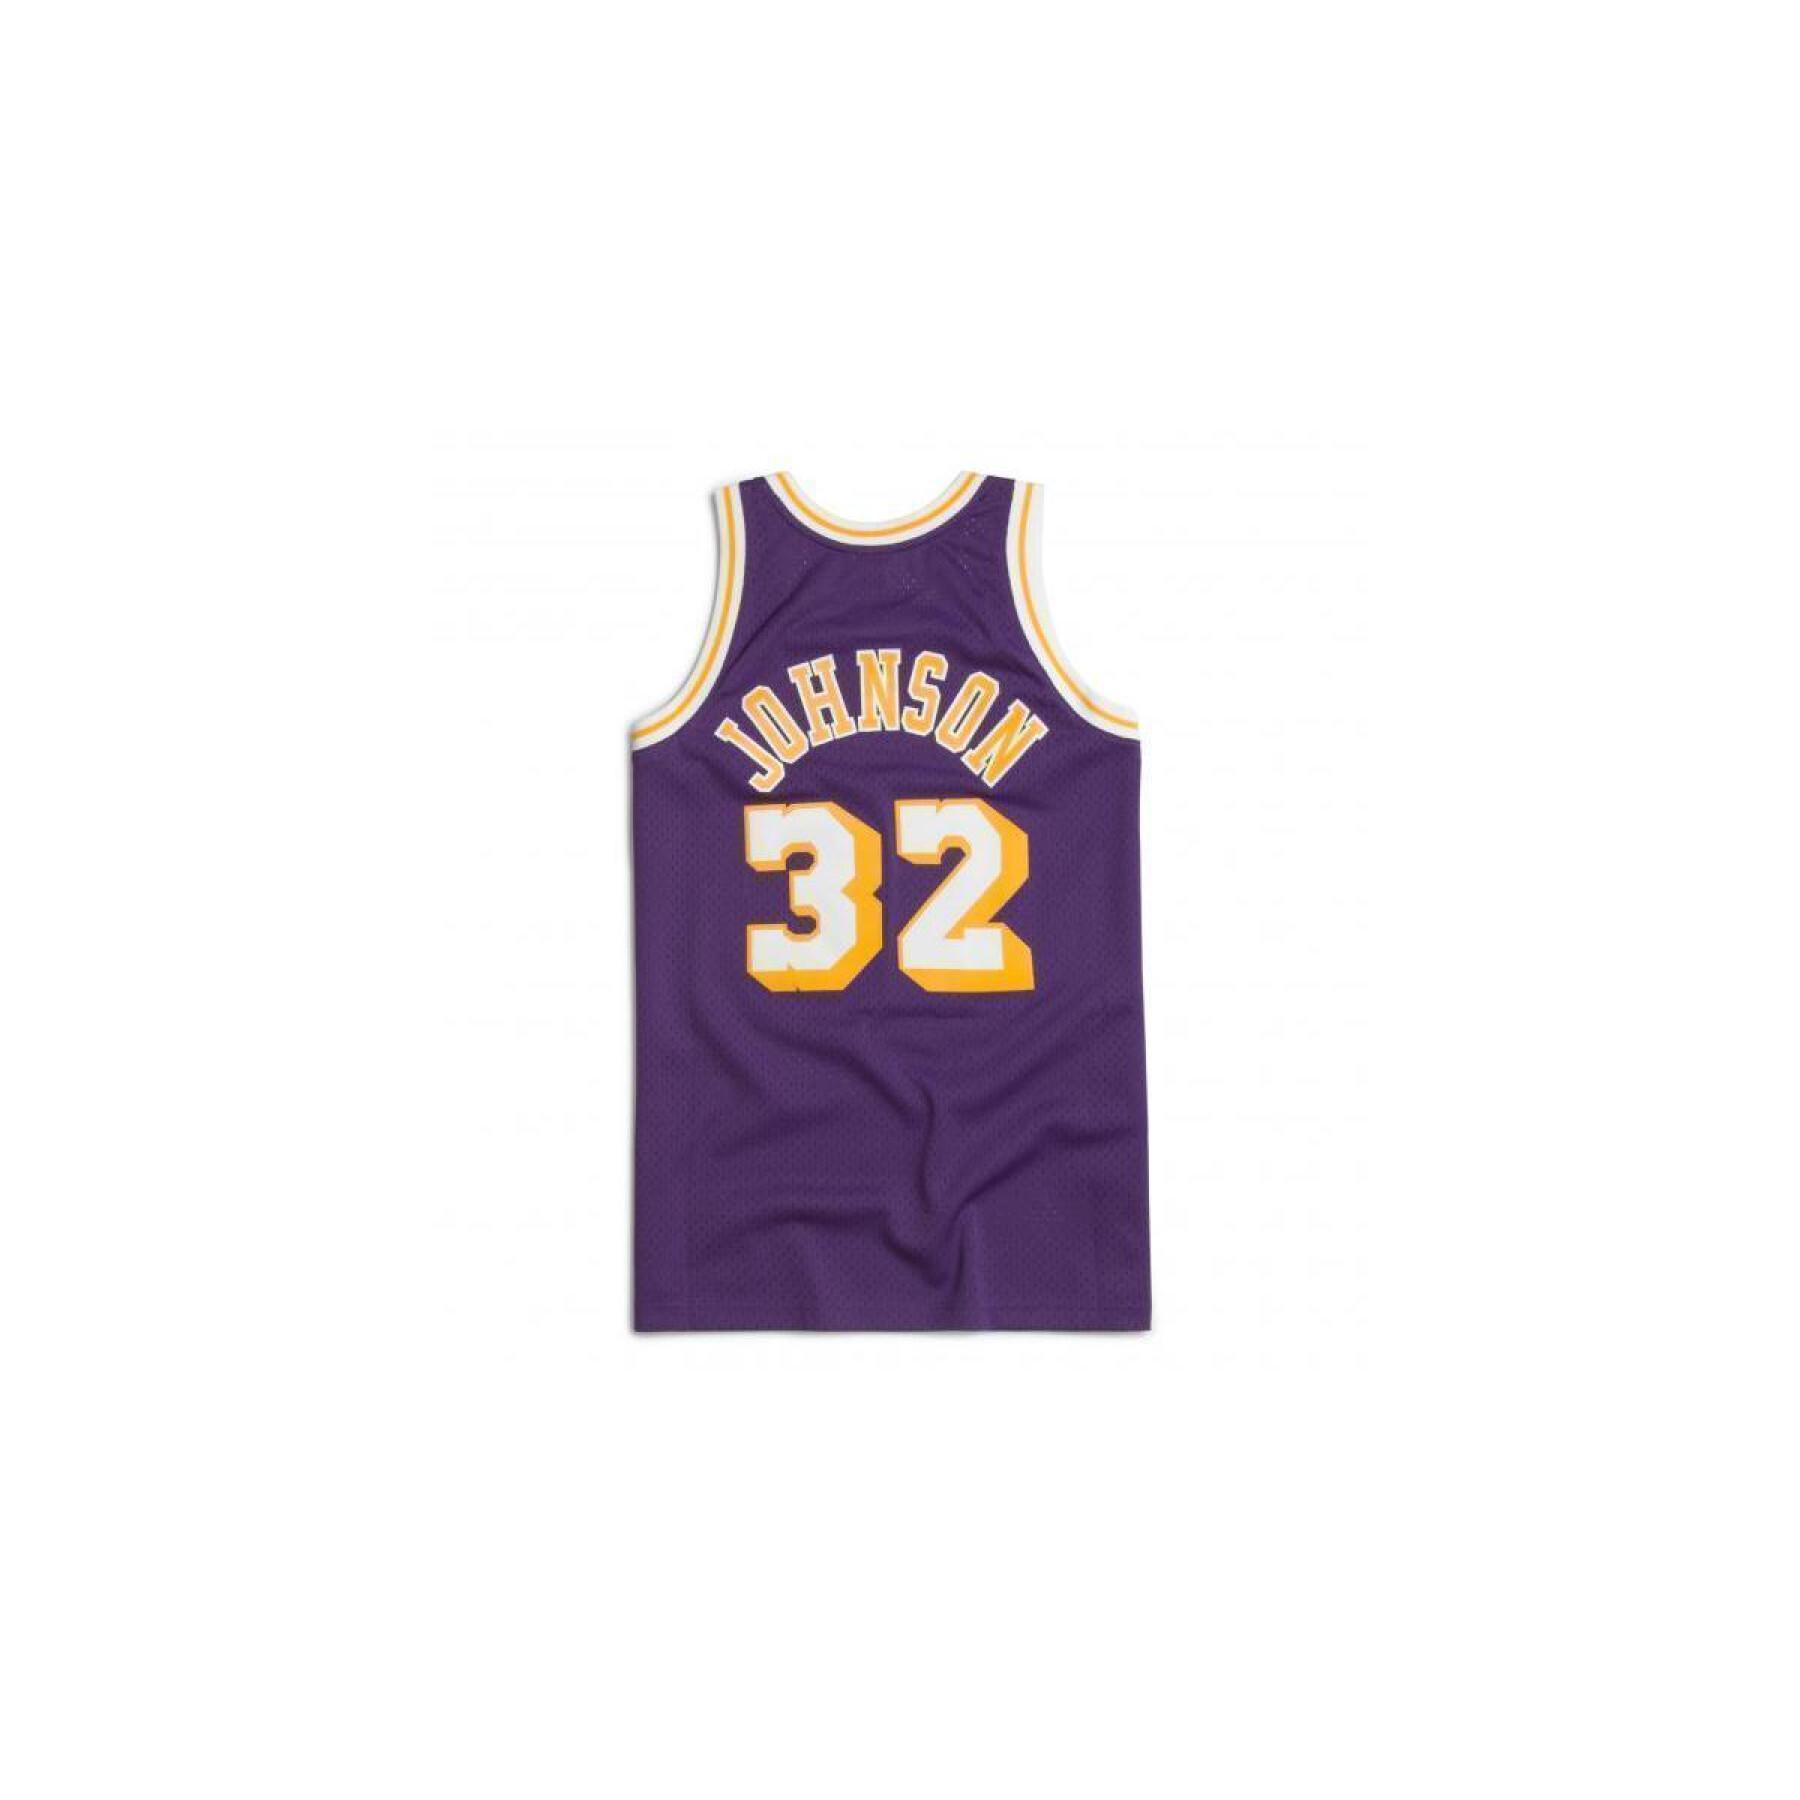 Jersey Los Angeles Lakers Magic Johnson #32